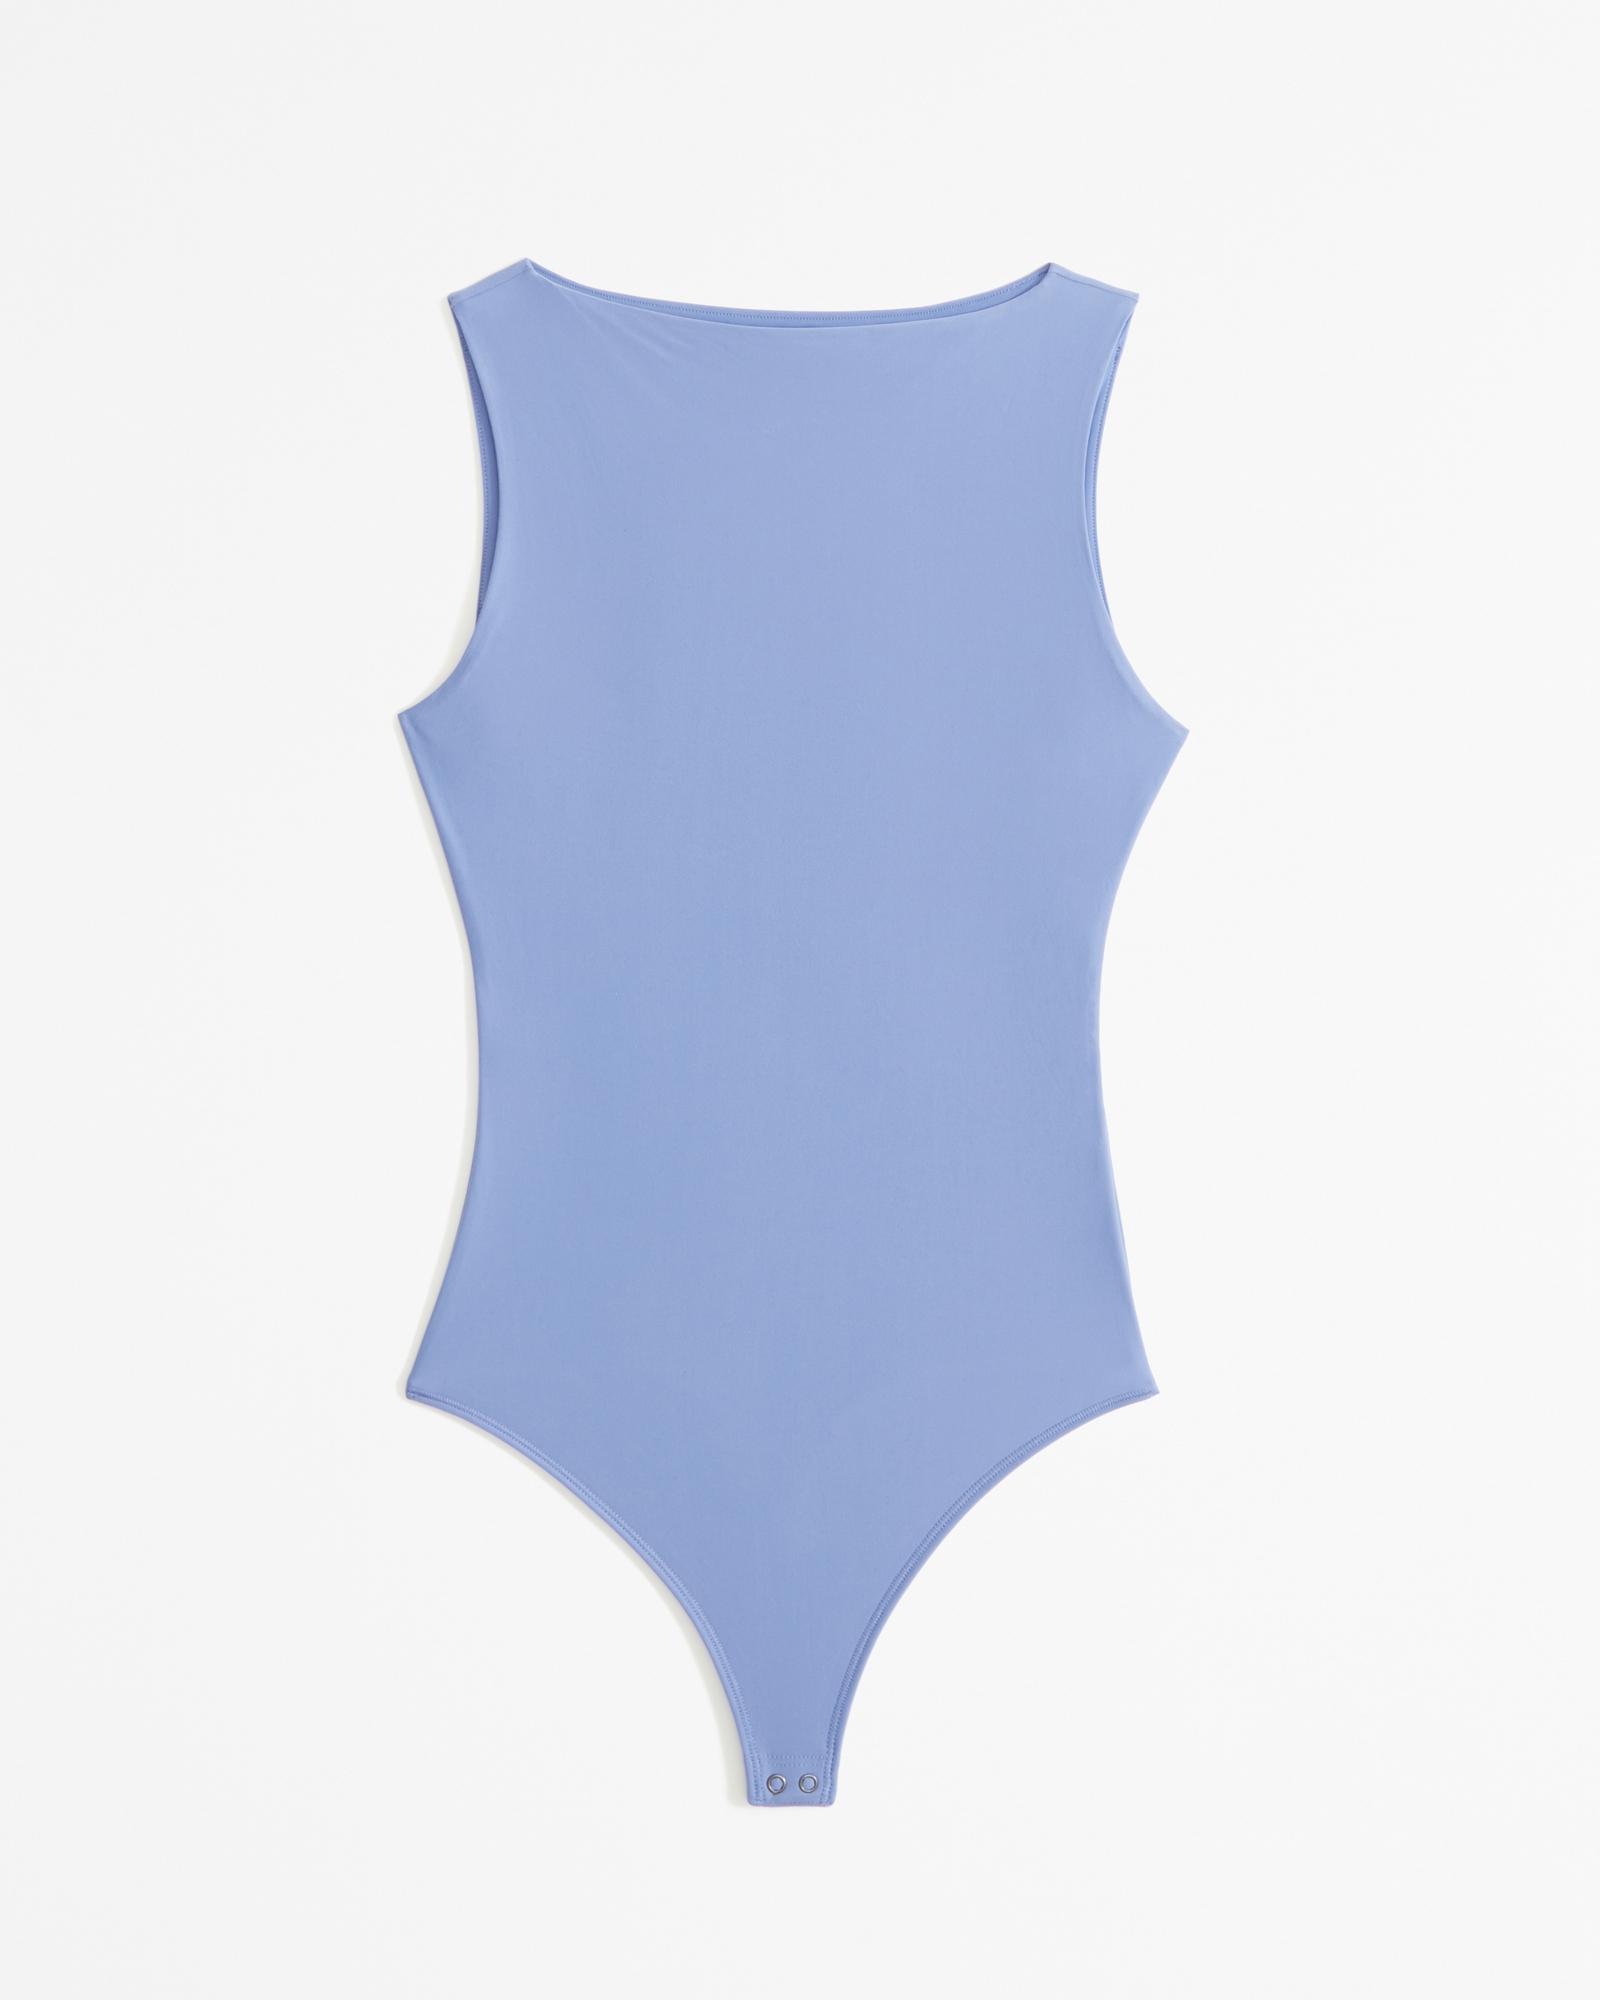 NWT HoneyLove Boldness blue bodysuit Medium